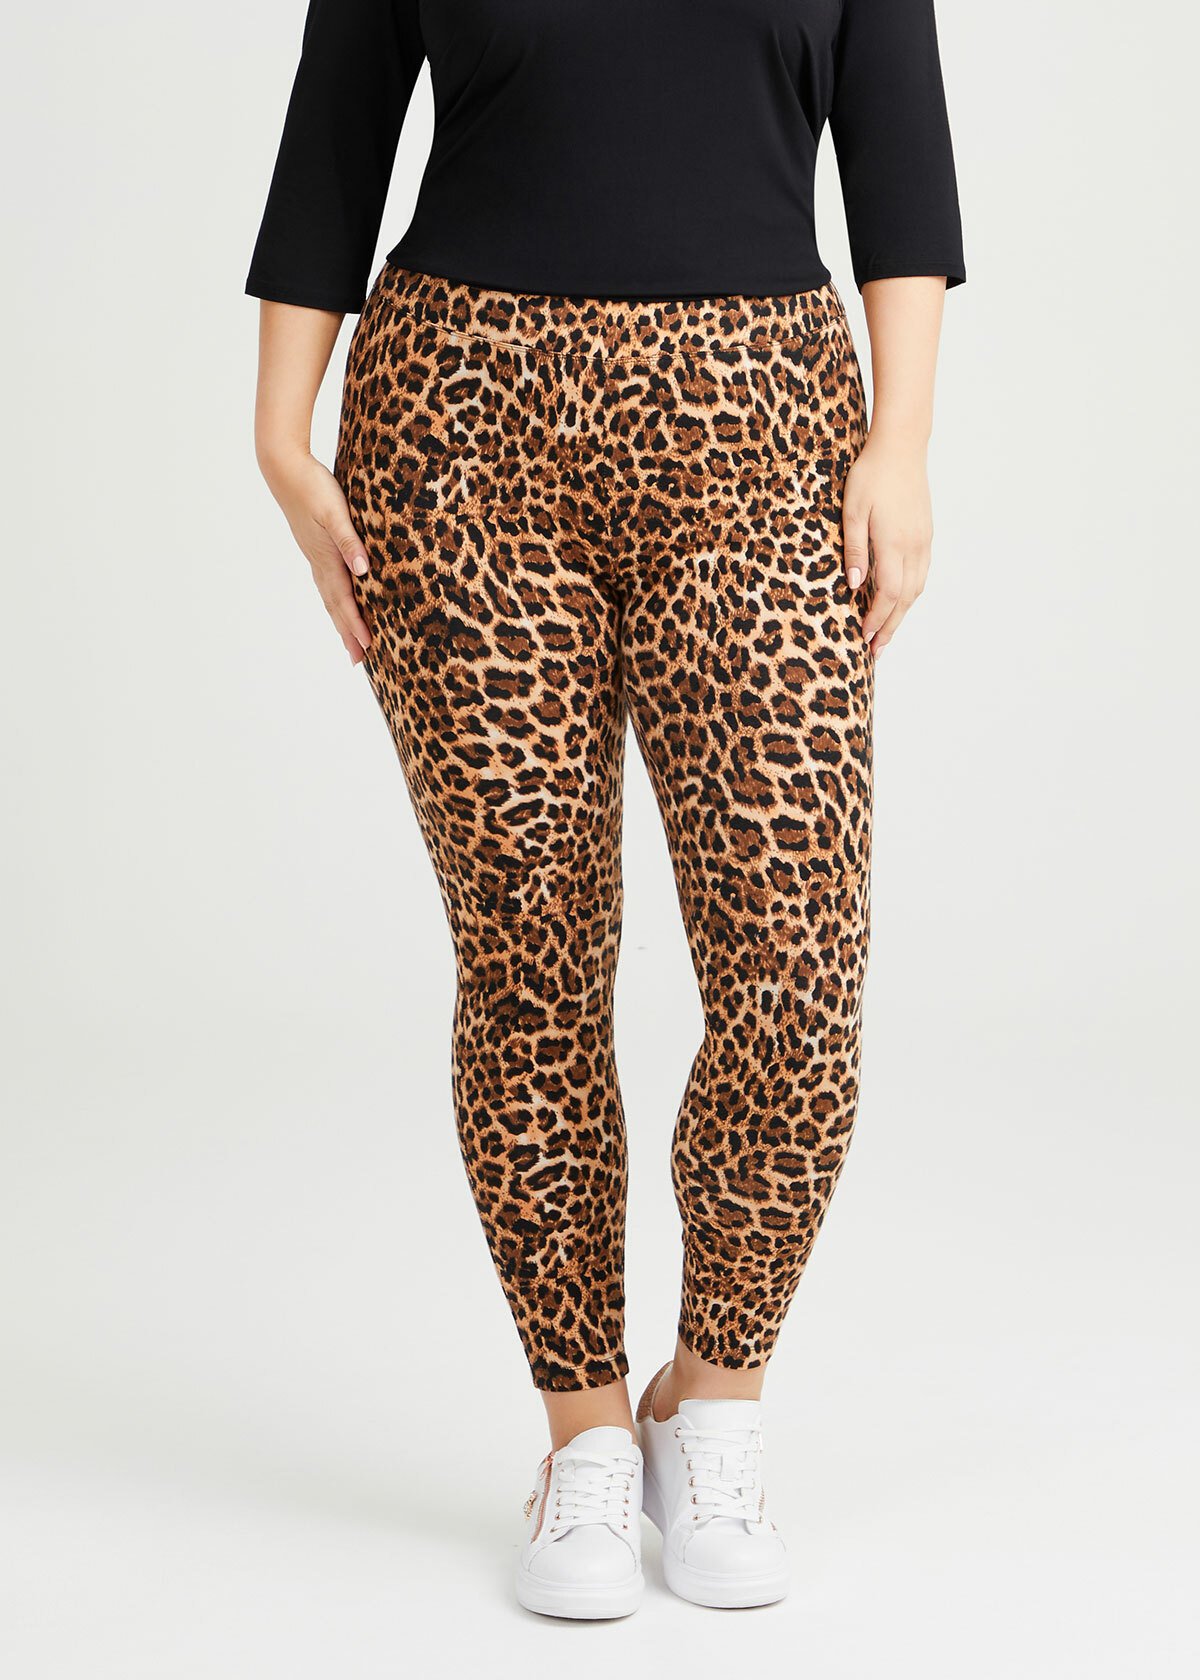 Michael Kors Plus Size Cheetah-Striped Leggings - Macy's